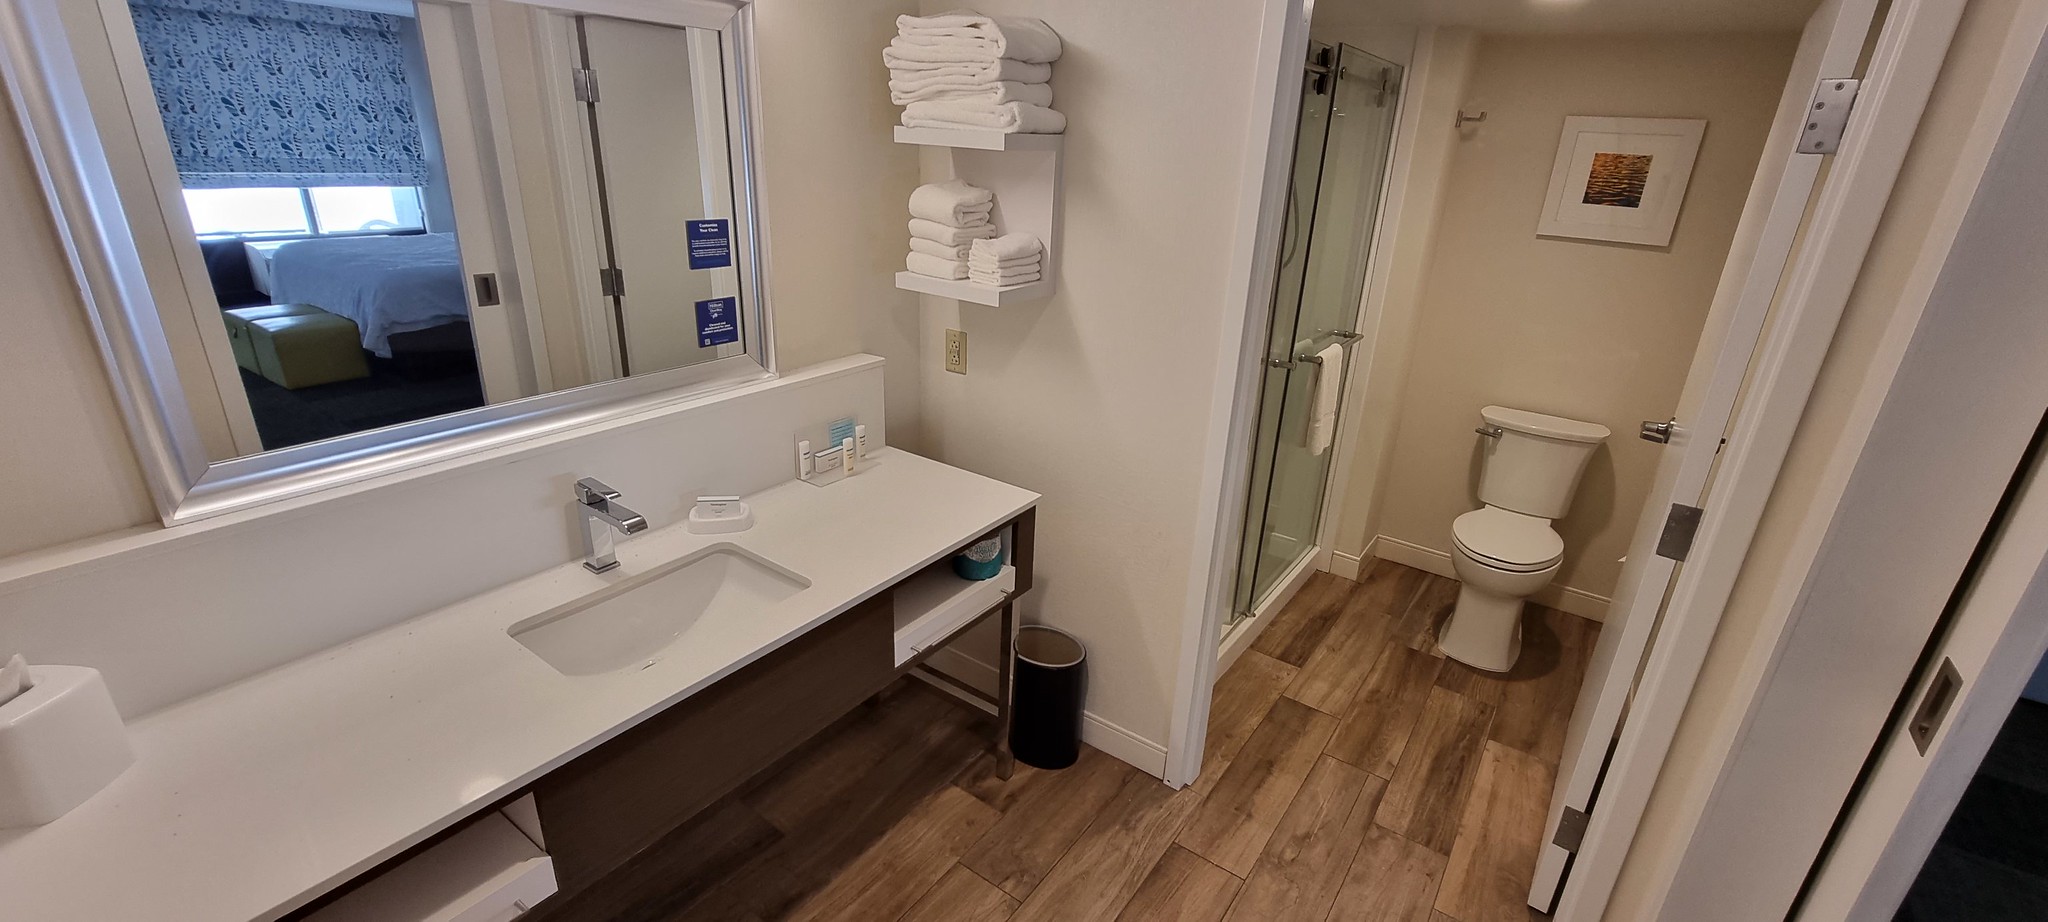 Nice facilities in our room at the Hampton Inn & Suites at Lake Havasu City